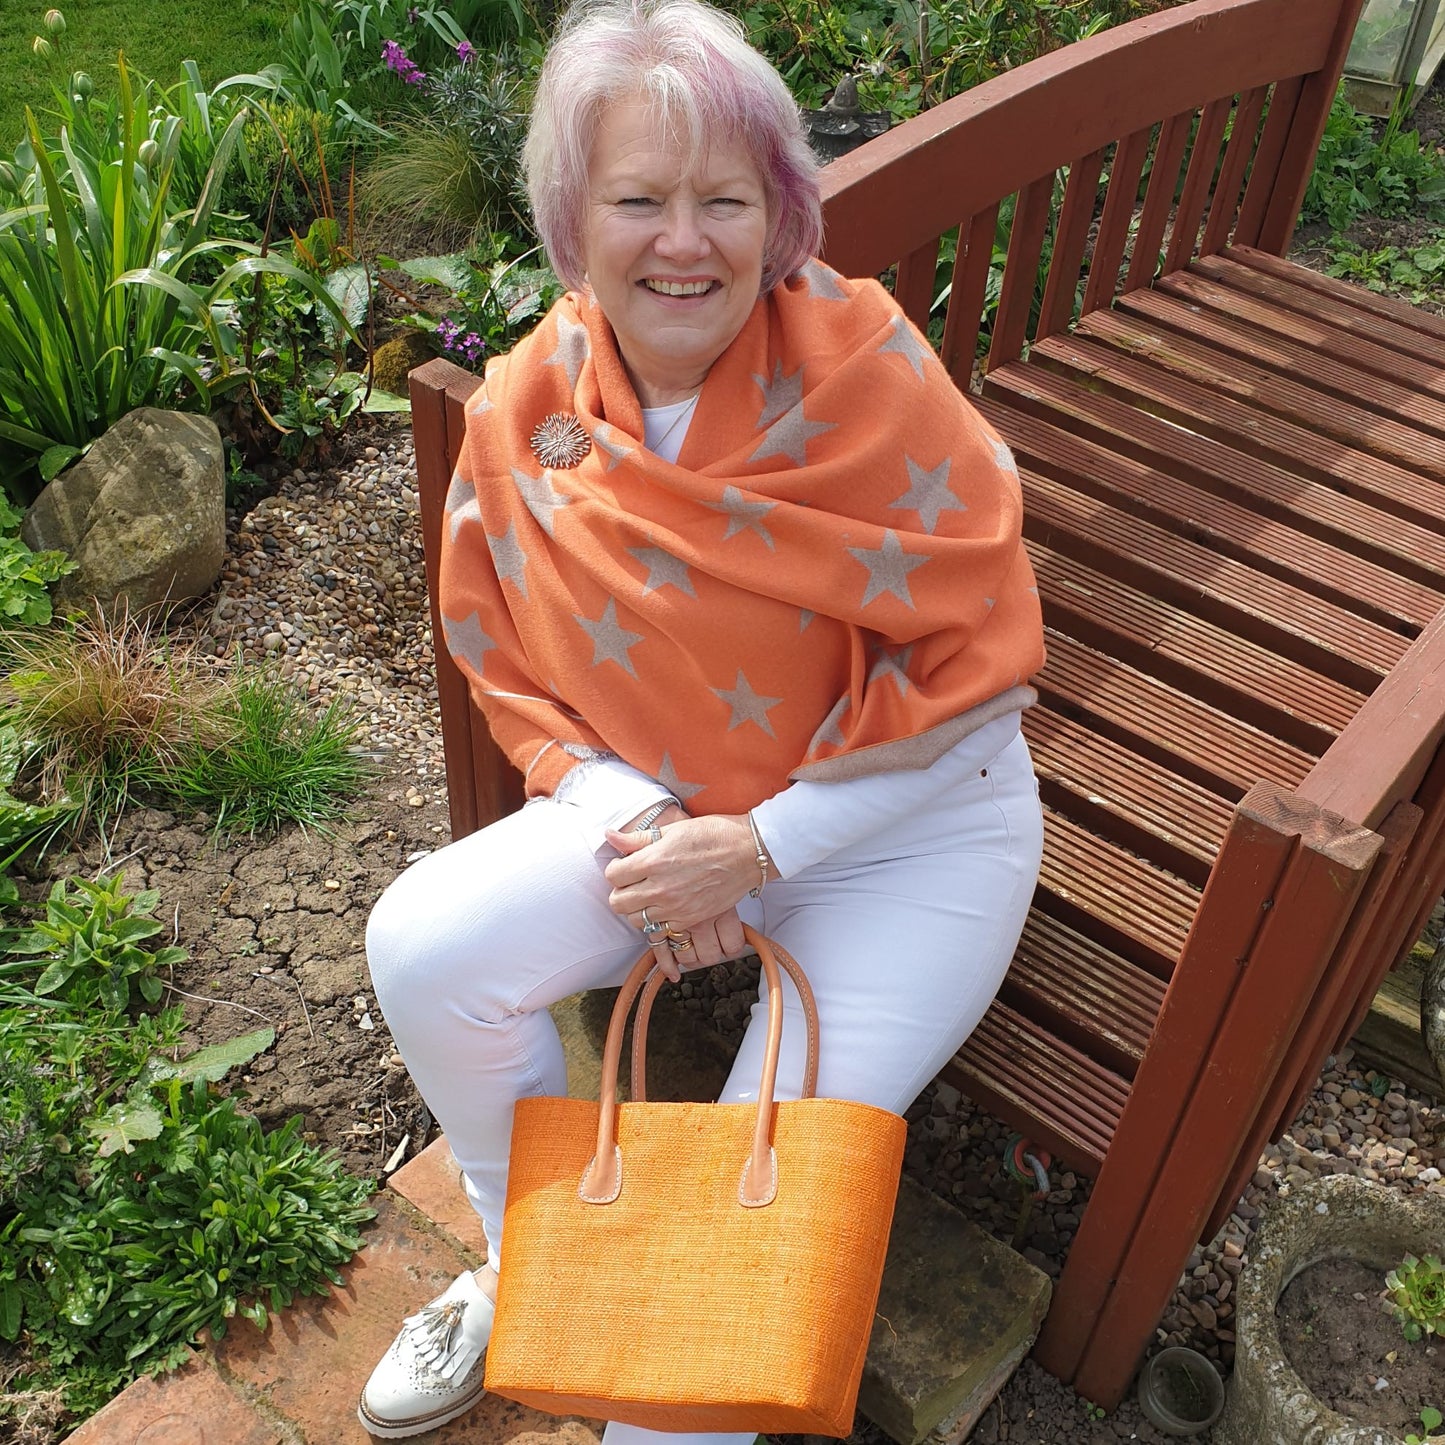 Lady in Orange star print pashmina holding an orange raffia basket with leather handles